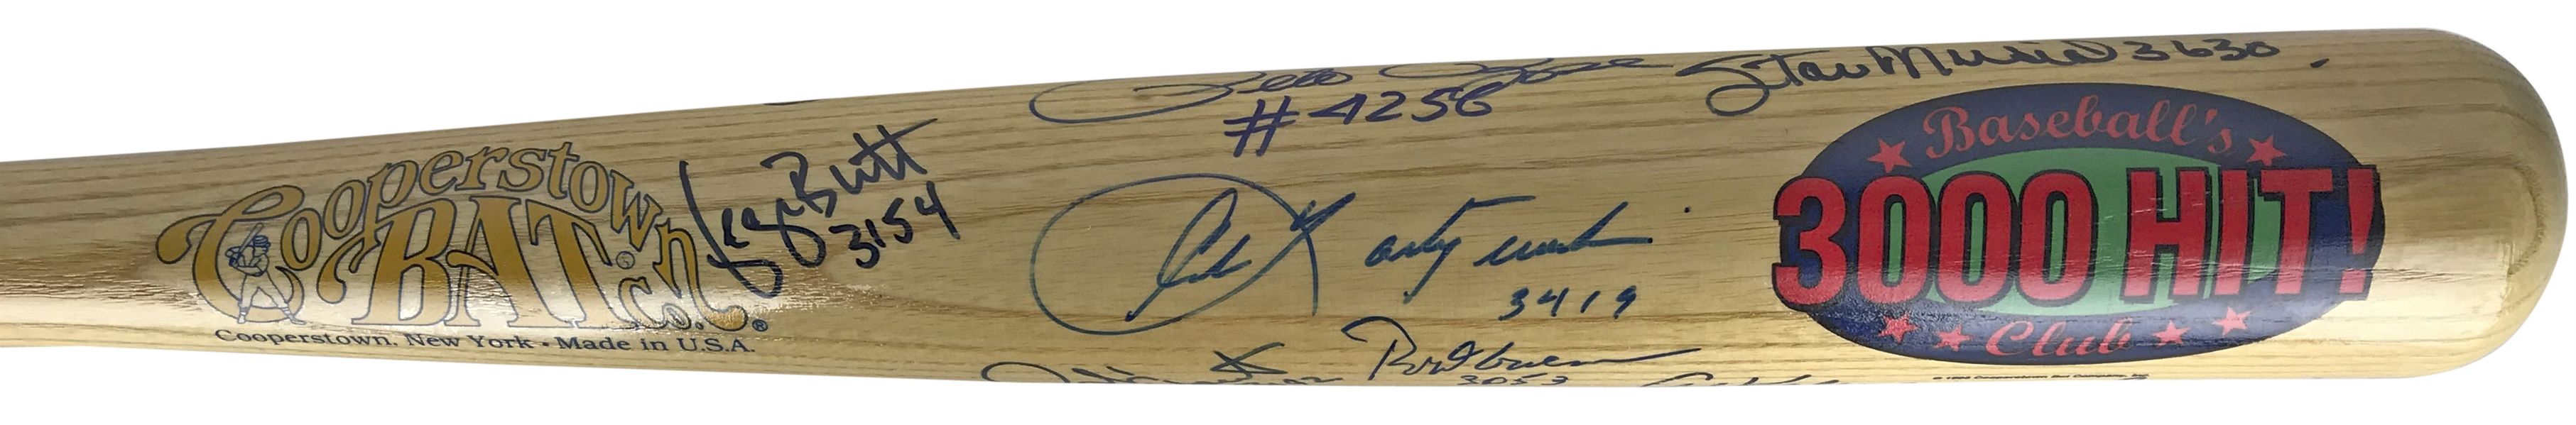 3000 Hit Club Impressive Multi-Signed Baseball Bat w/ 17 Signatures! (Beckett/BAS Guaranteed)